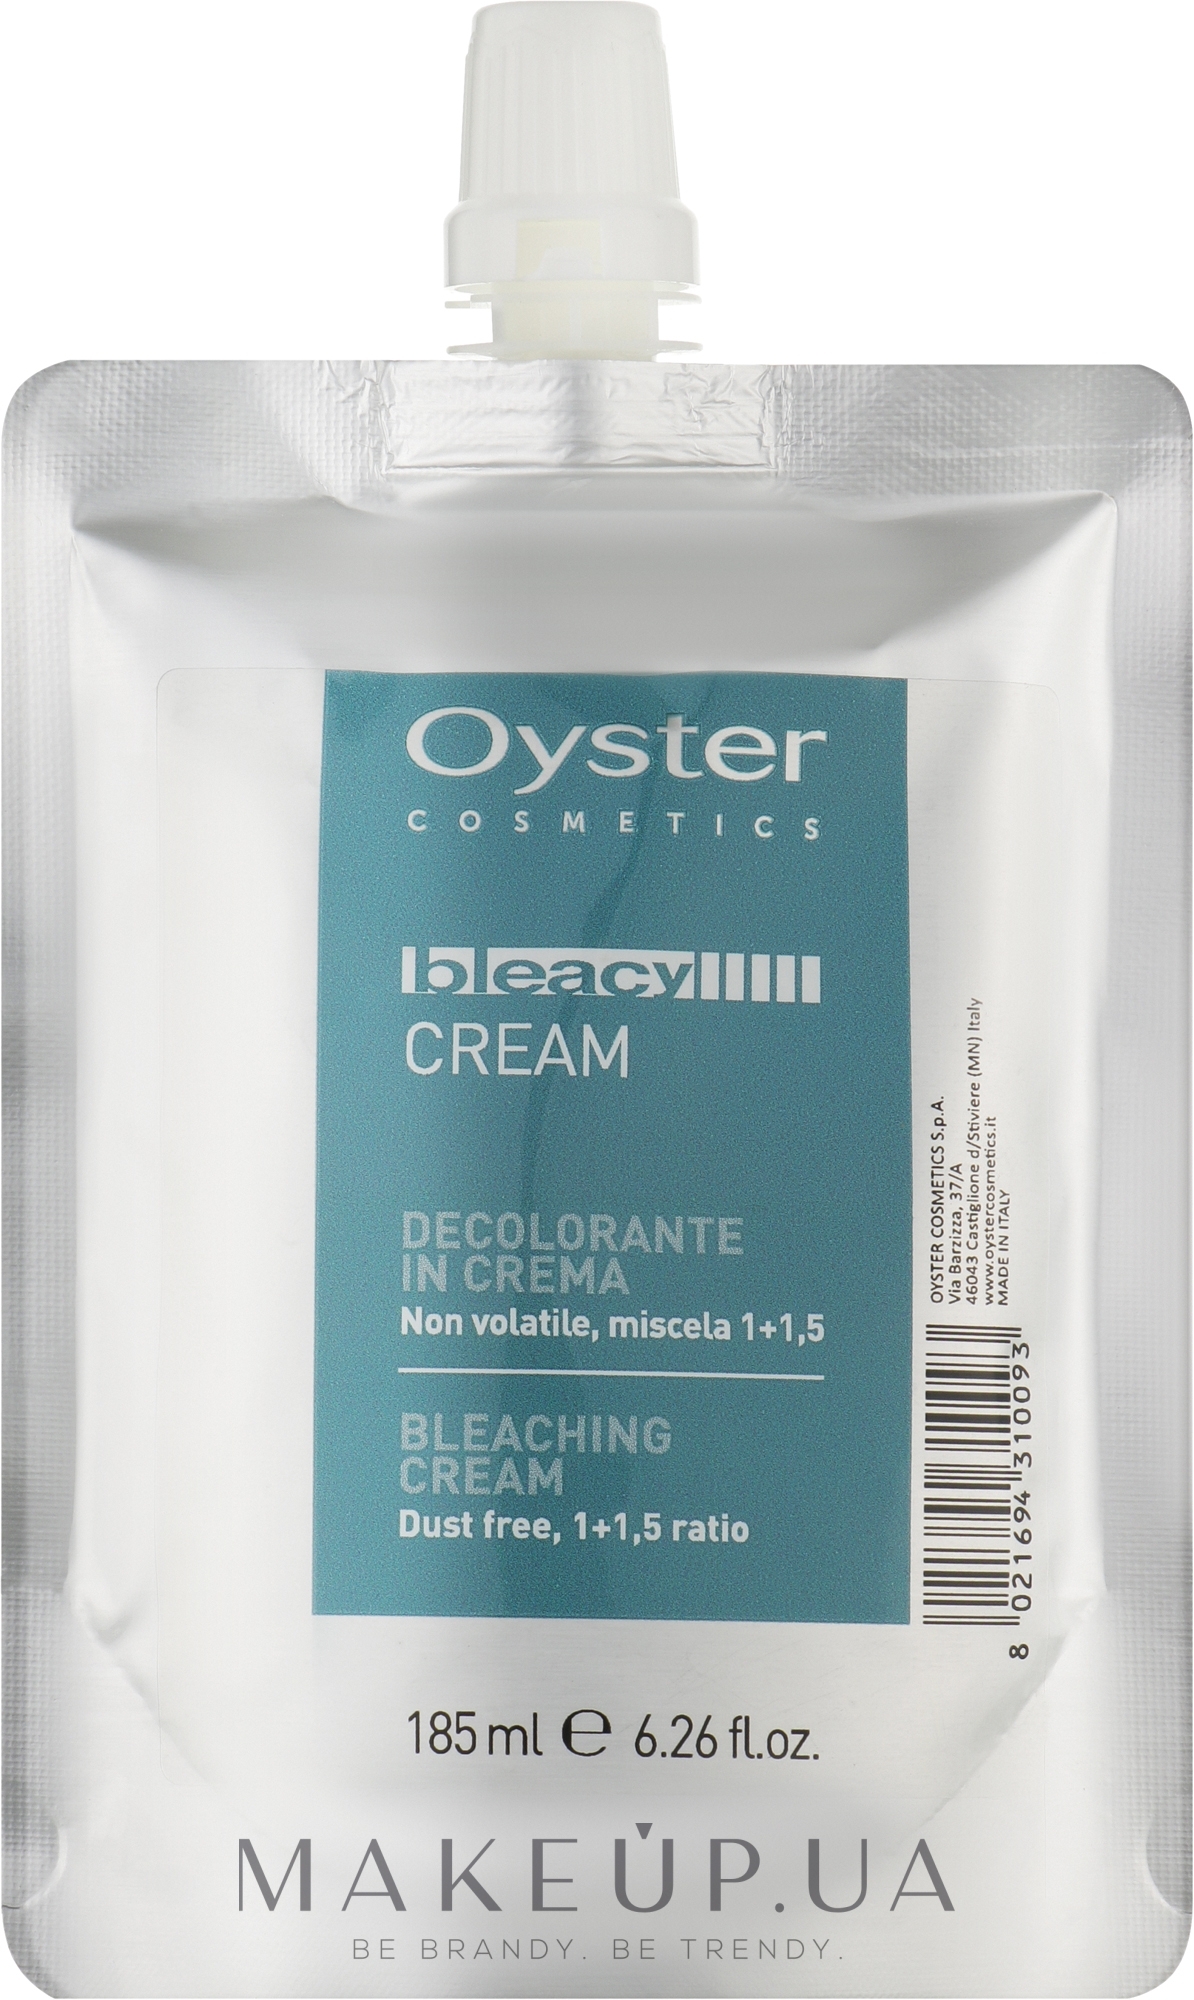 Крем для волос осветляющий - Oyster Cosmetics Bleacy Cream — фото 185ml